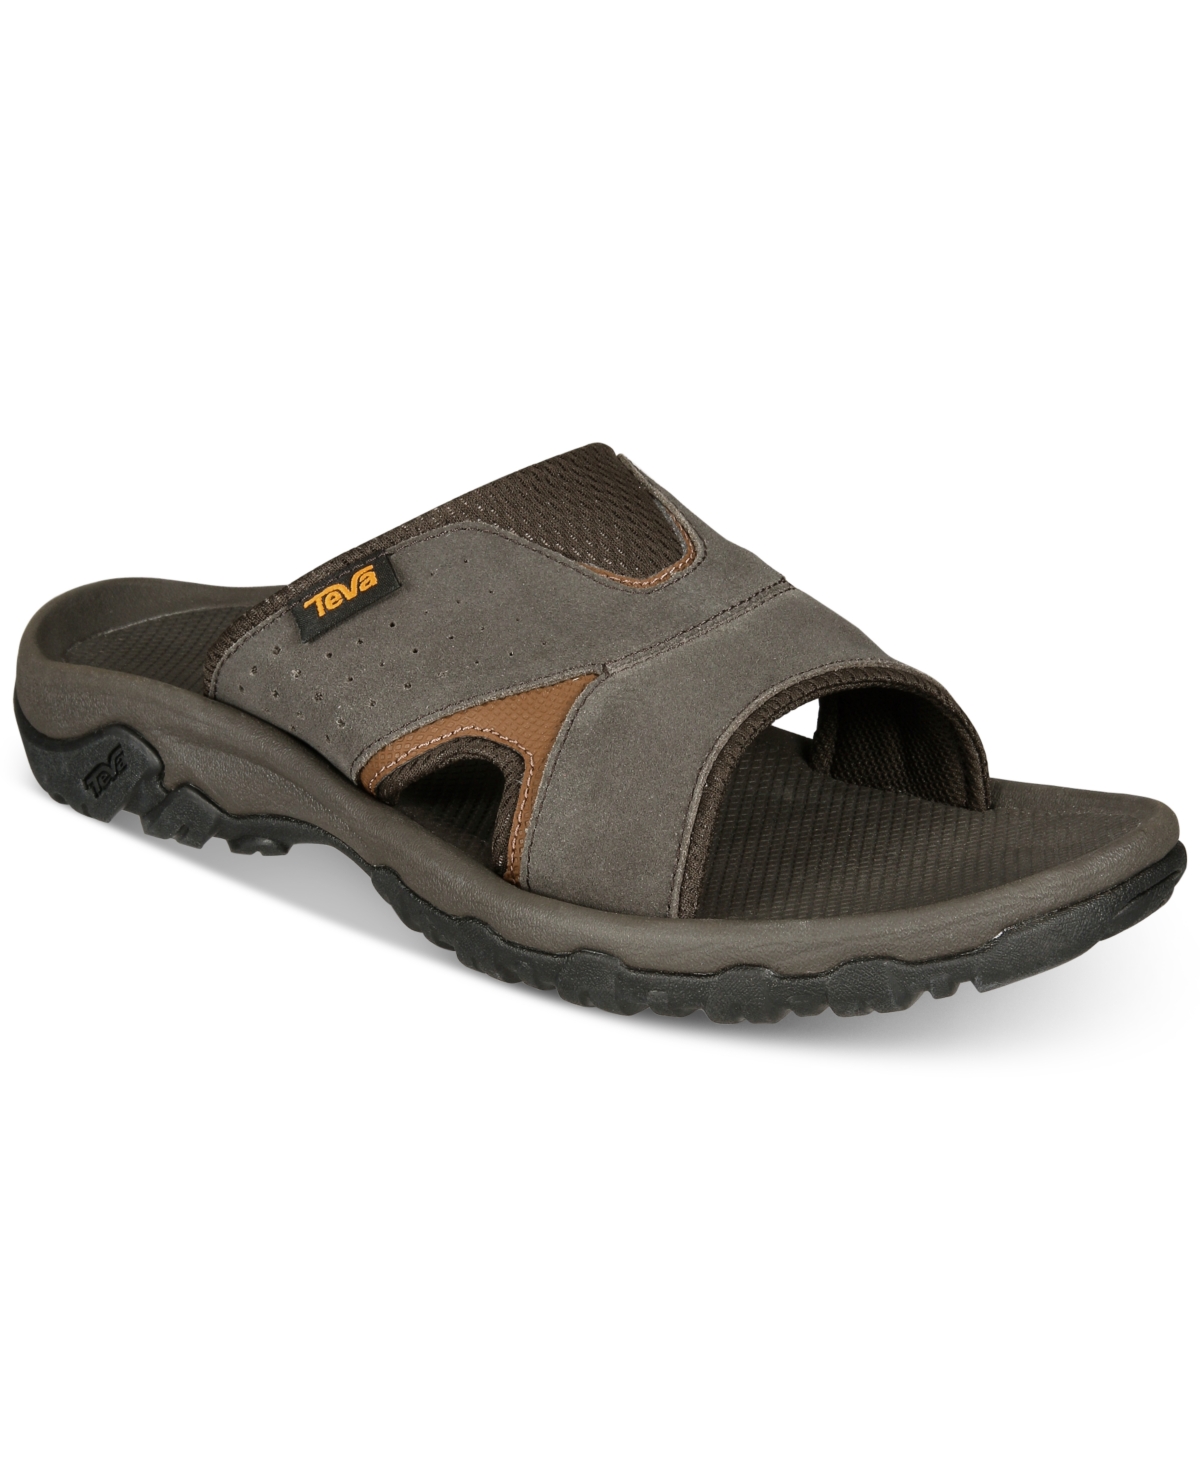 Men's Katavi 2 Water-Resistant Slide Sandals - Dark Taupe